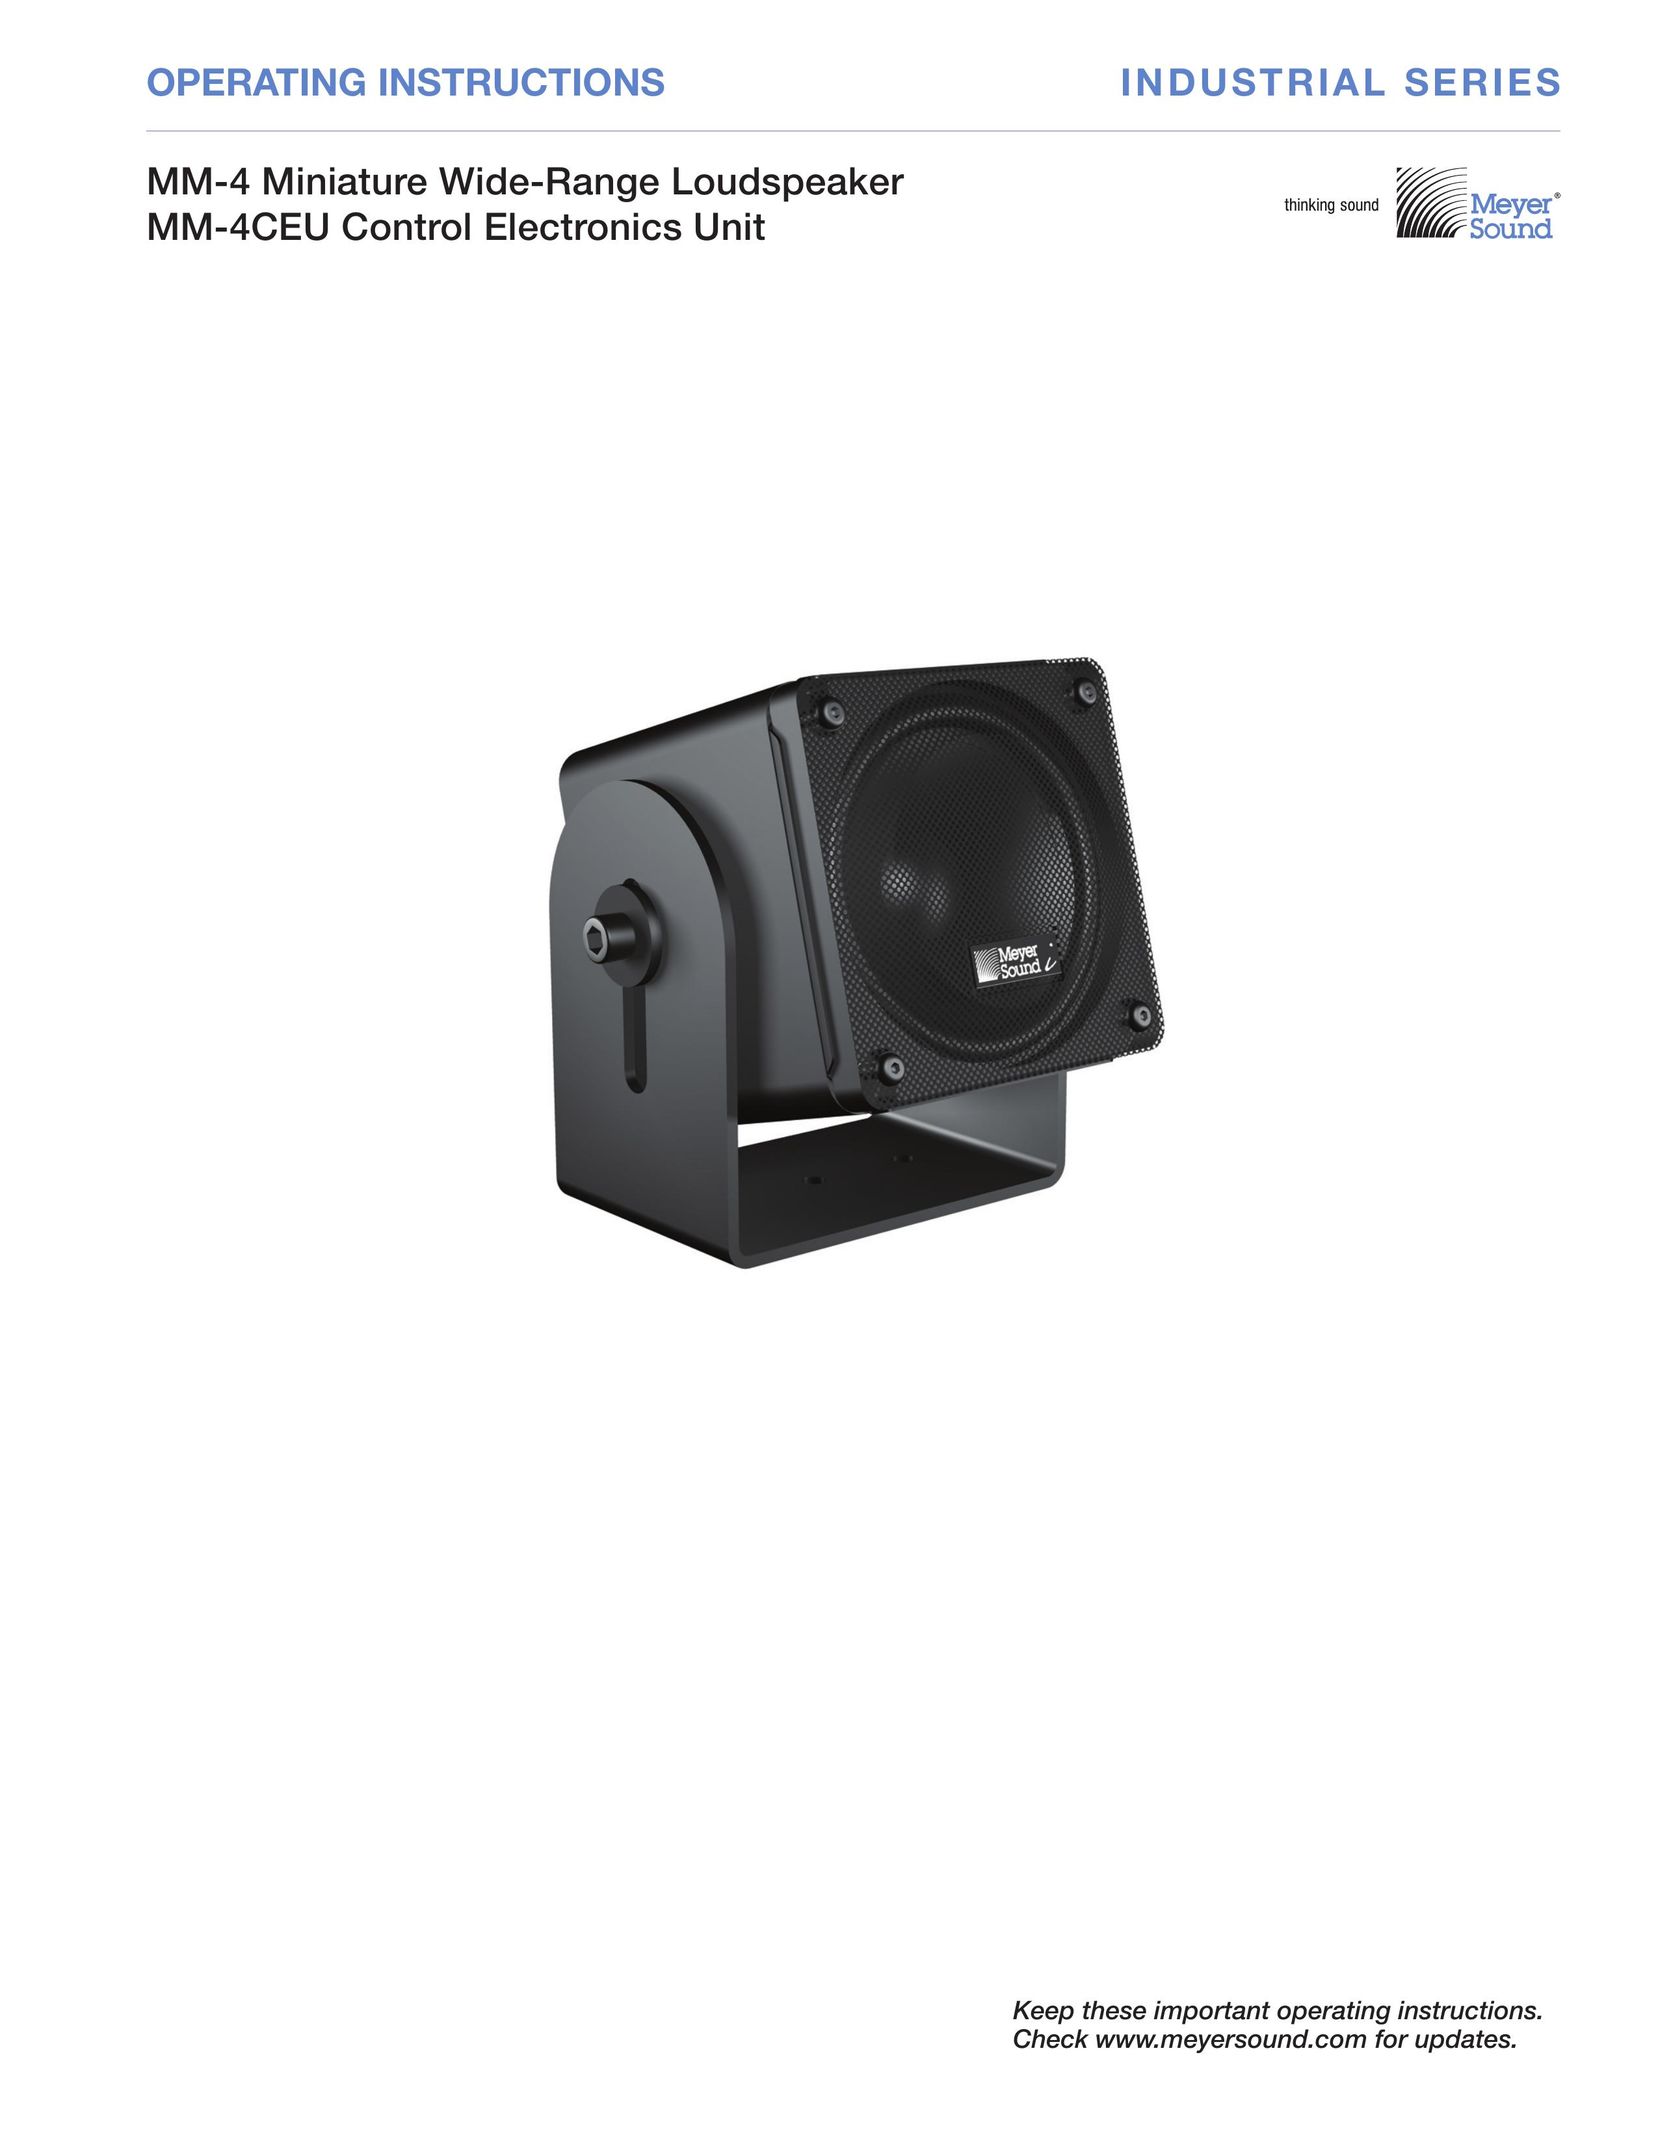 Meyer Sound MM-4CEU Speaker User Manual